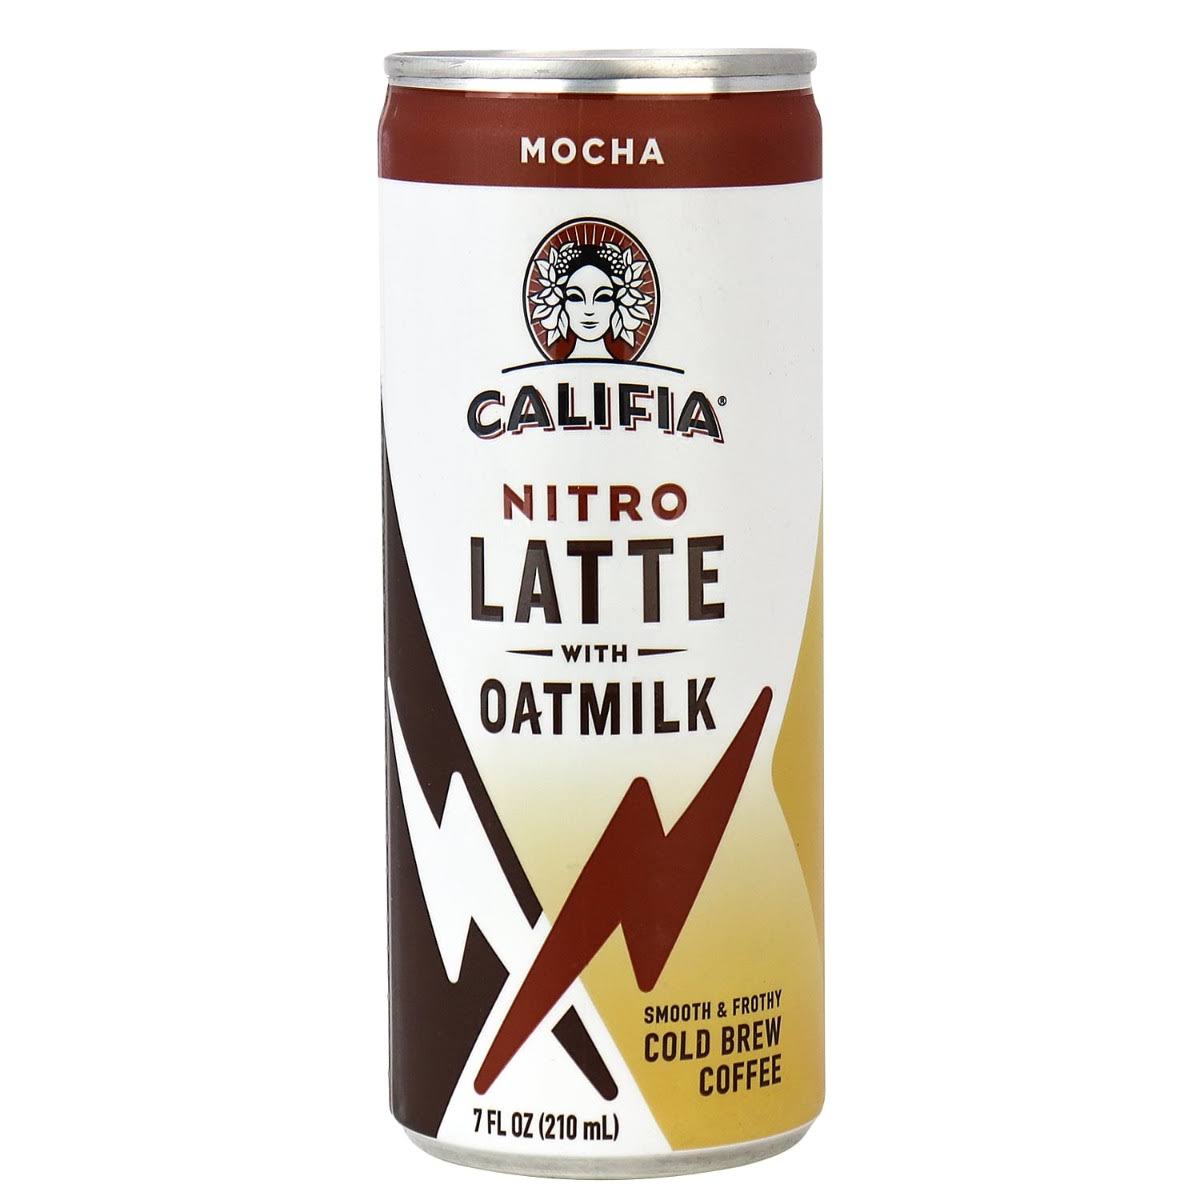 Califia Farms Nitro Latte Cold Brew Coffee - with Oatmilk, Mocha, 7oz